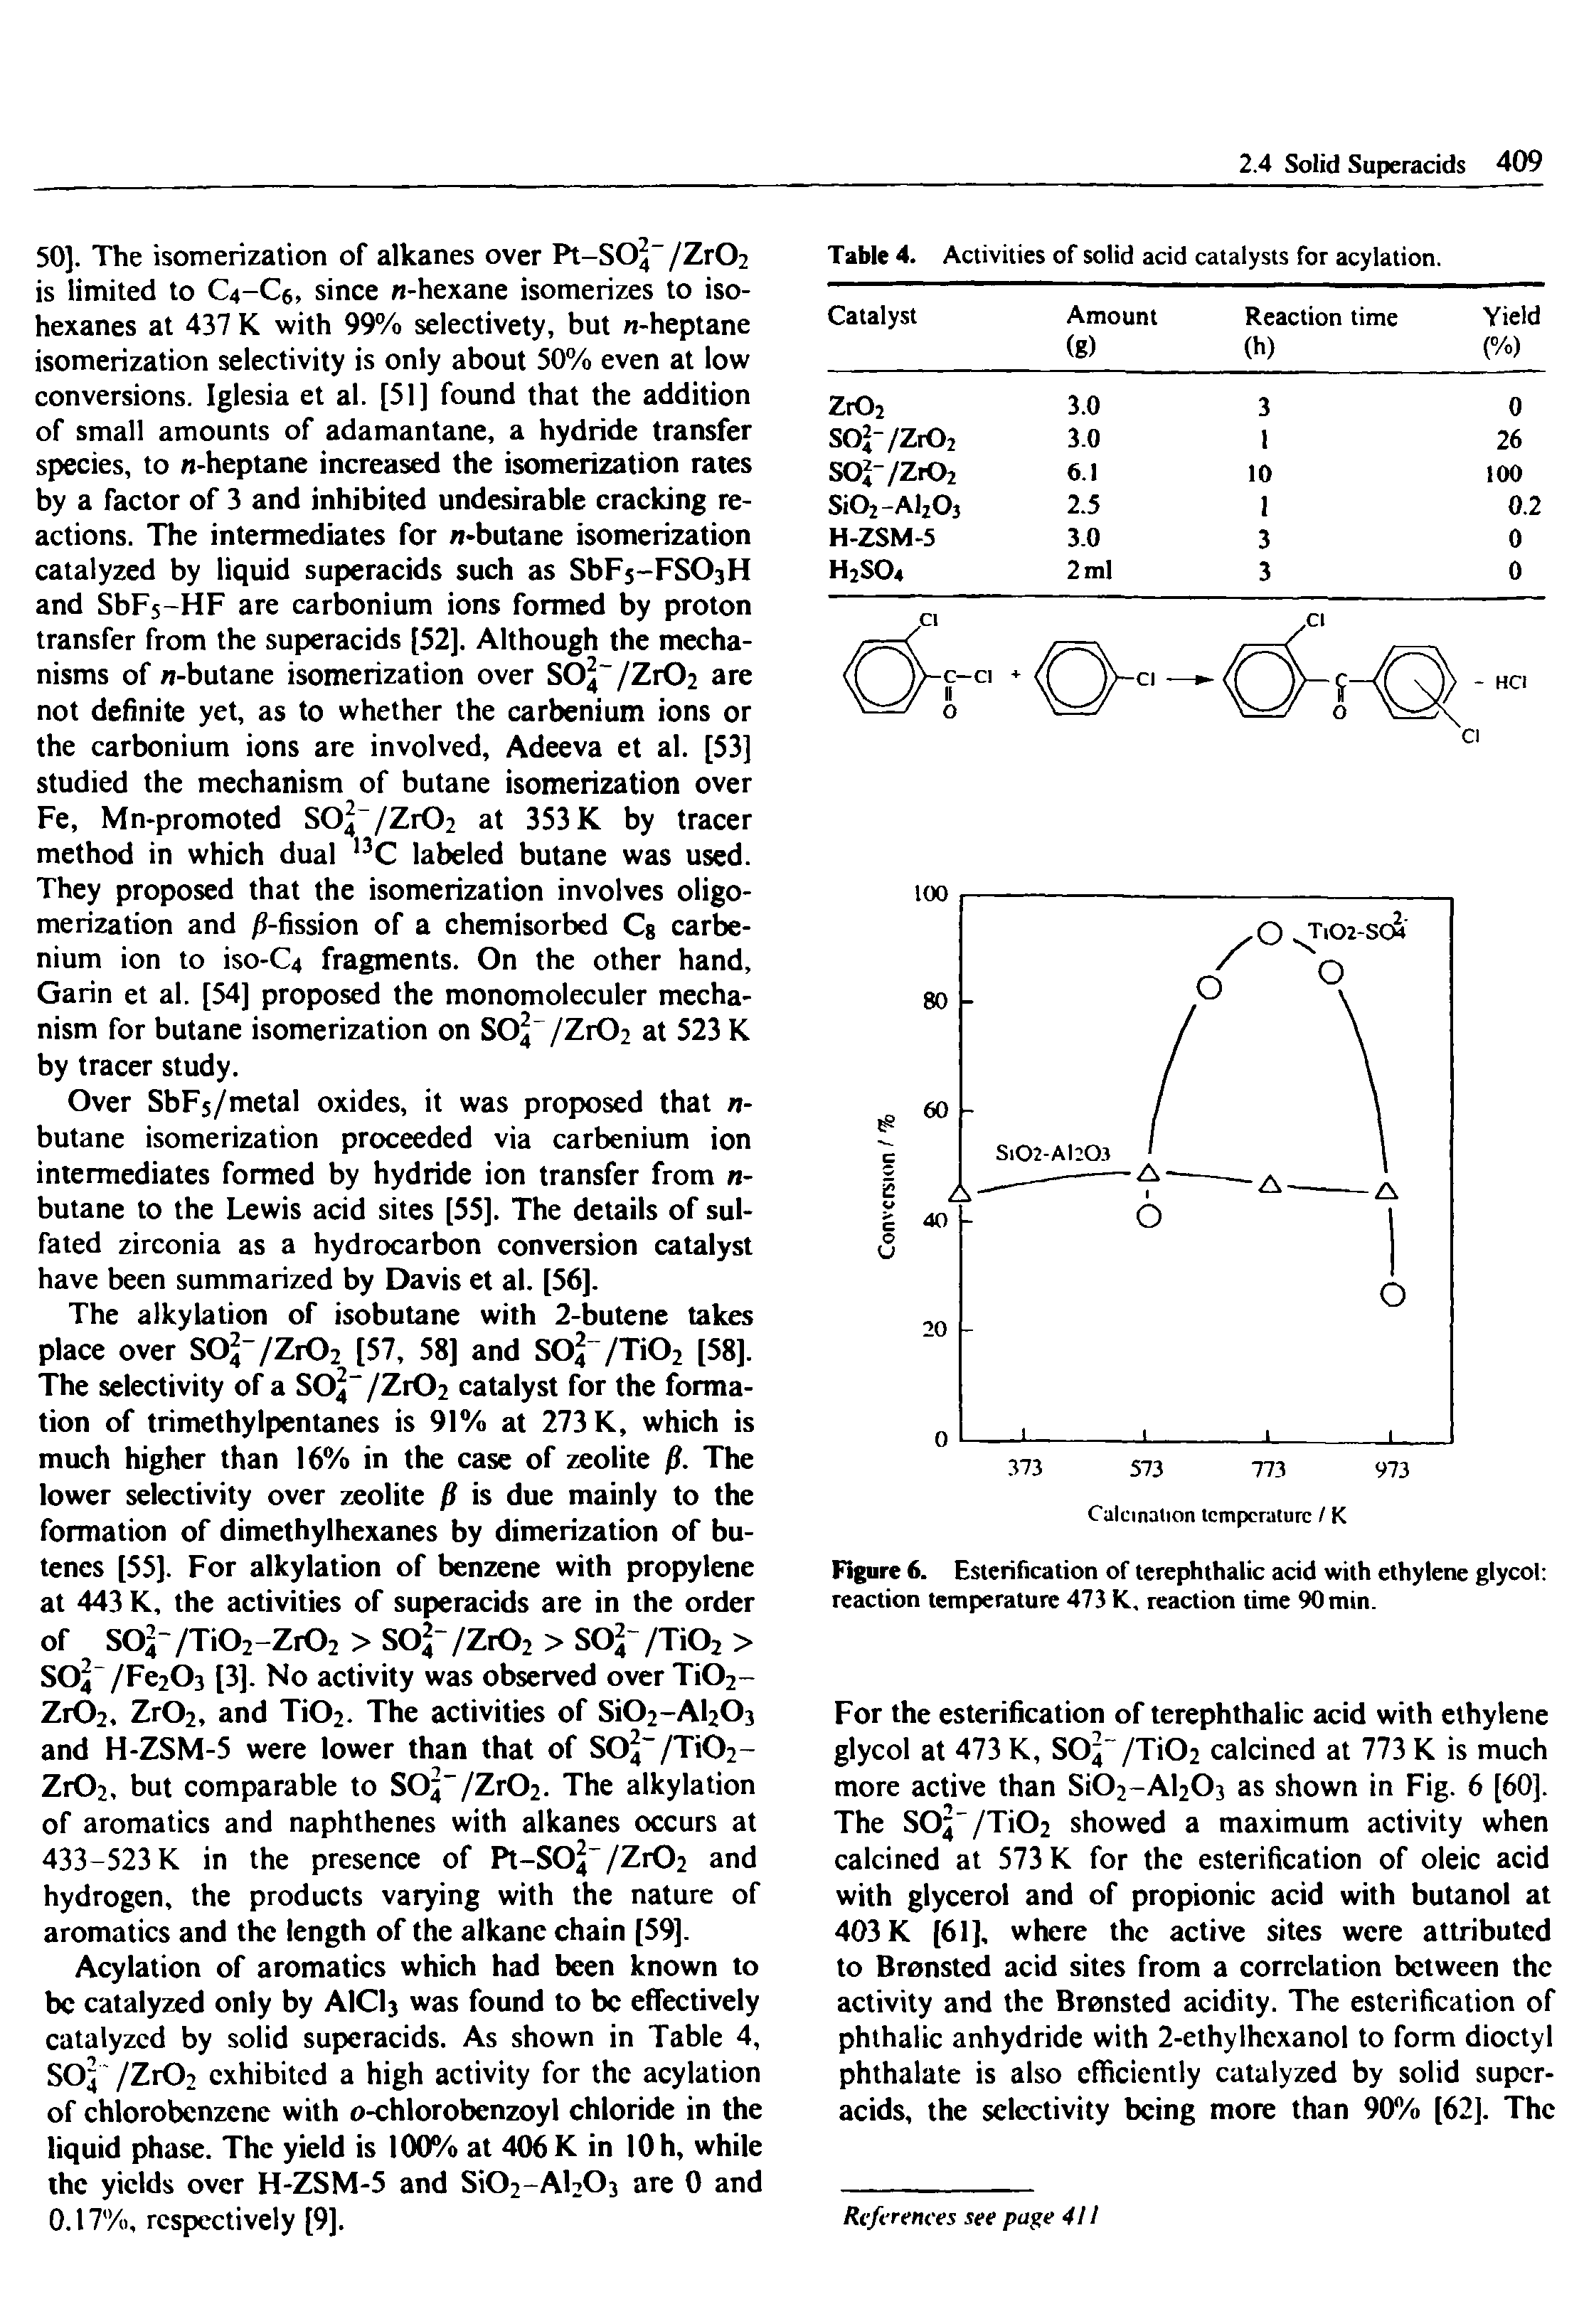 Figure 6. Esterification of terephthalic acid with ethylene glycol reaction temperature 473 K, reaction time 90 min.